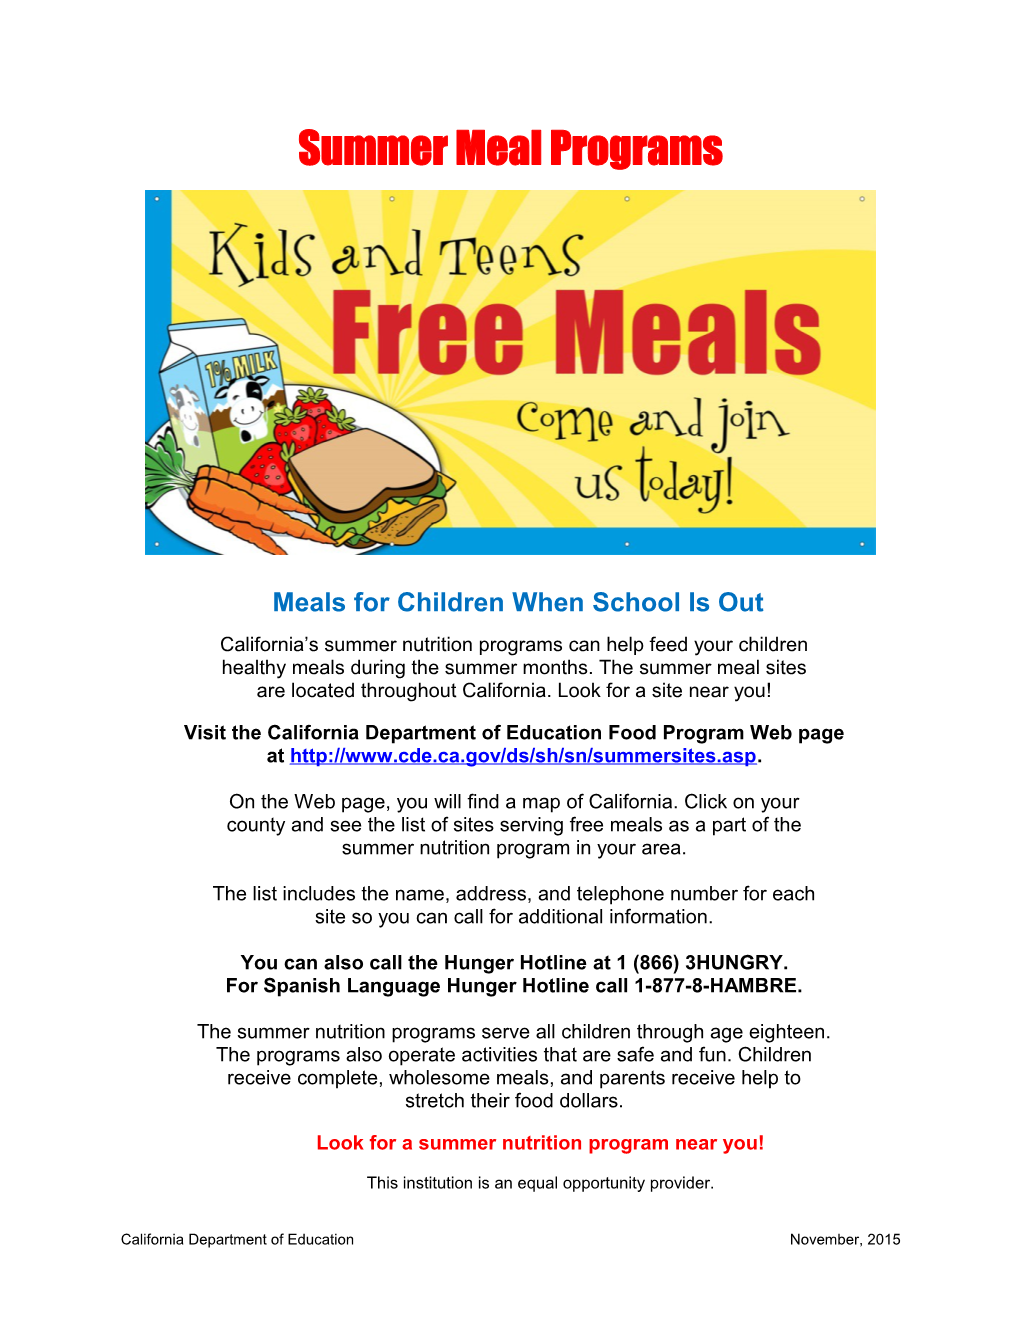 SFSP Parent Flyer - Summer Meal Programs (CA Dept of Education)